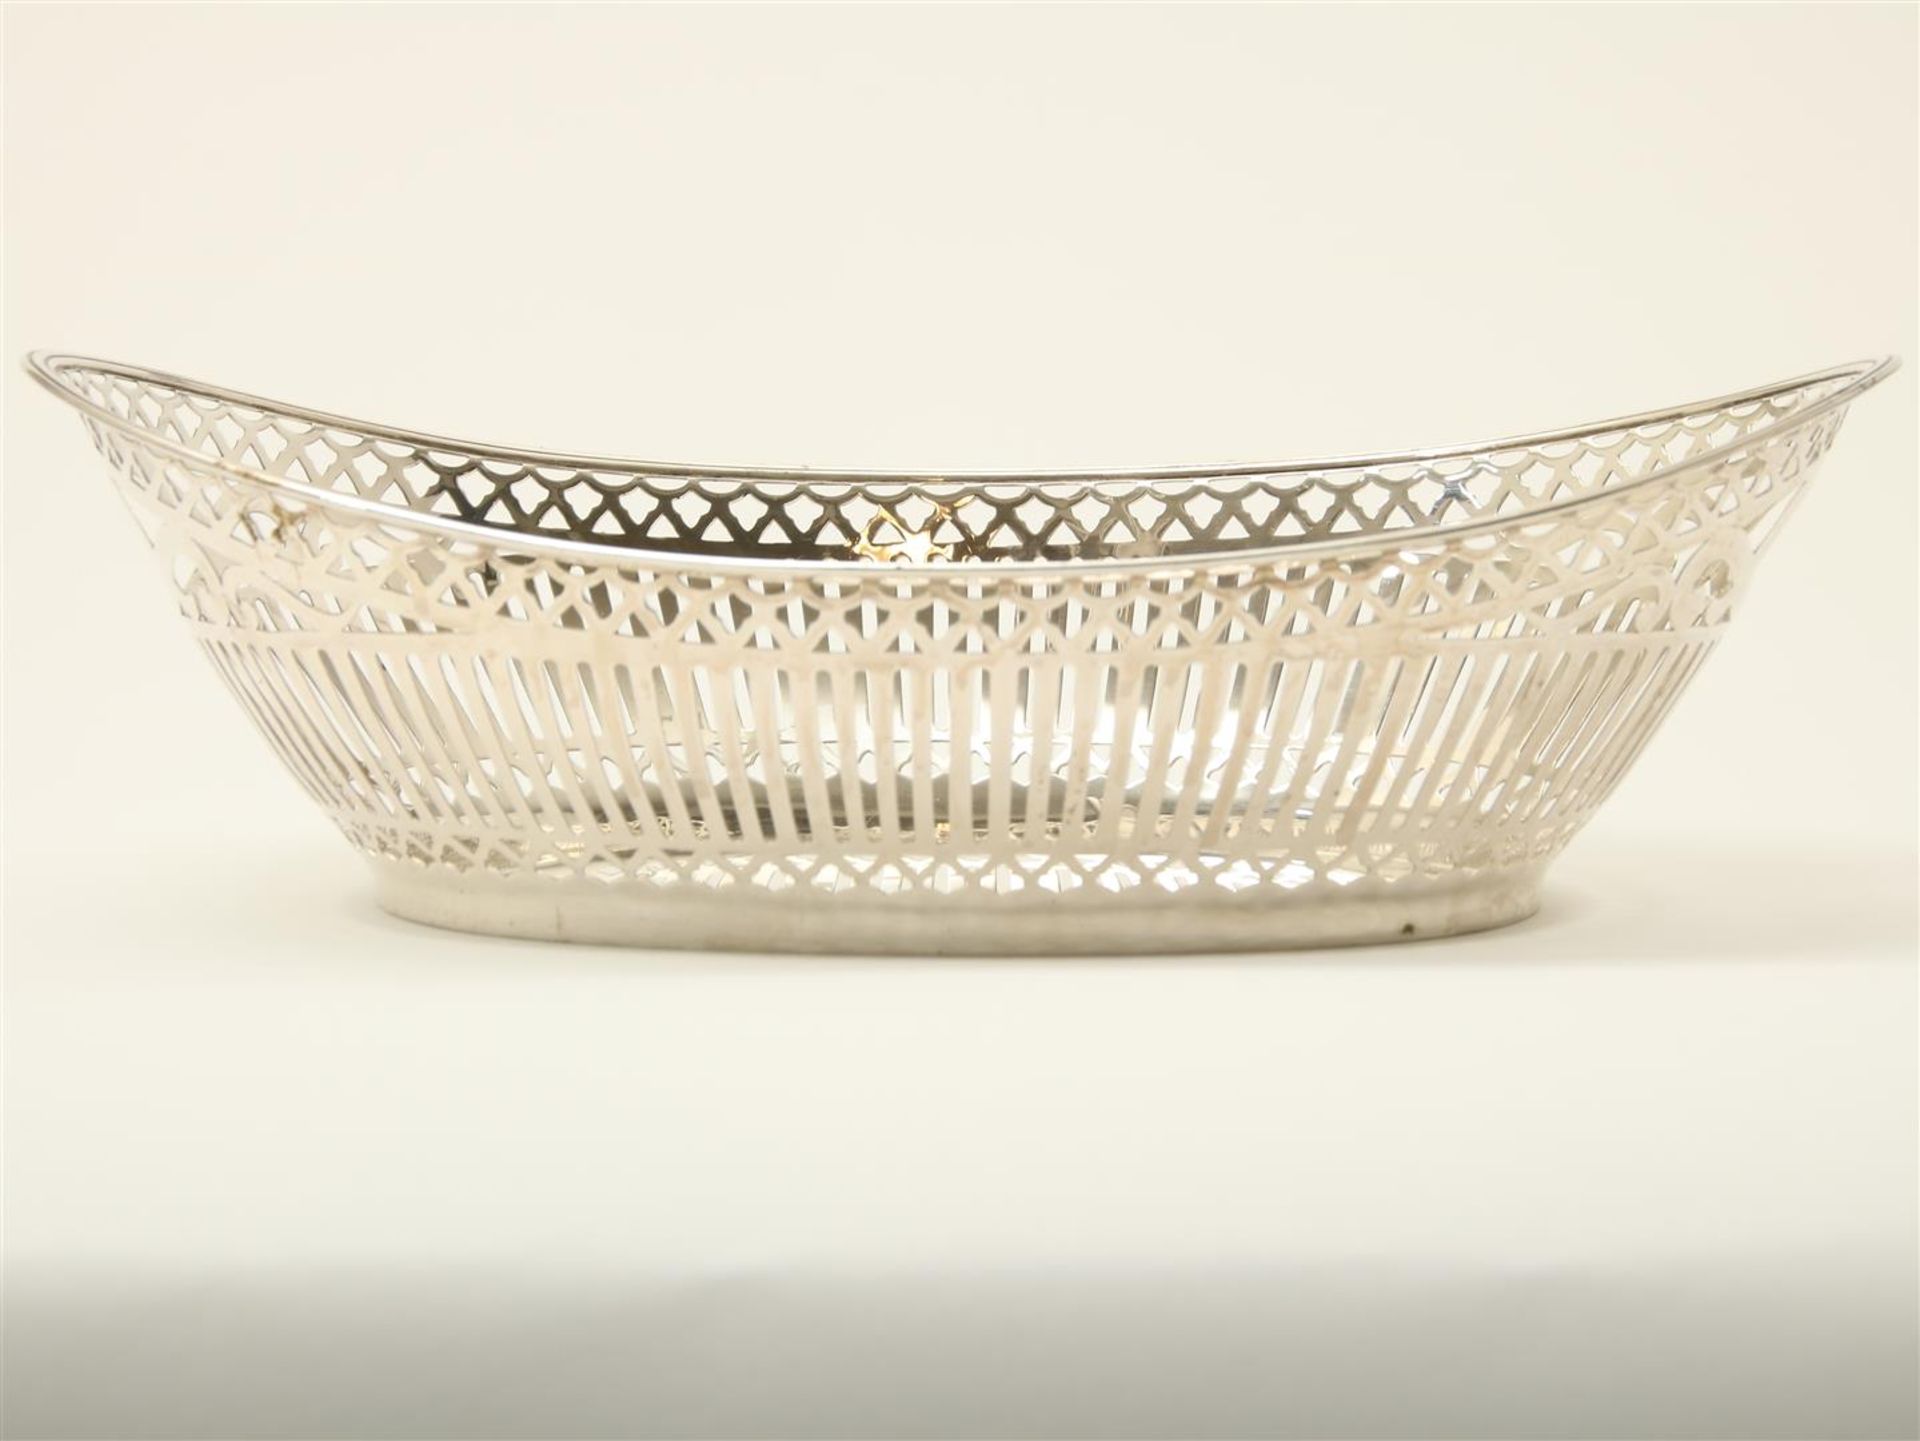 Openwork silver bread basket with bar motif, grade 835/000, maker's mark: "APz3", Fa. A. Pressburg &